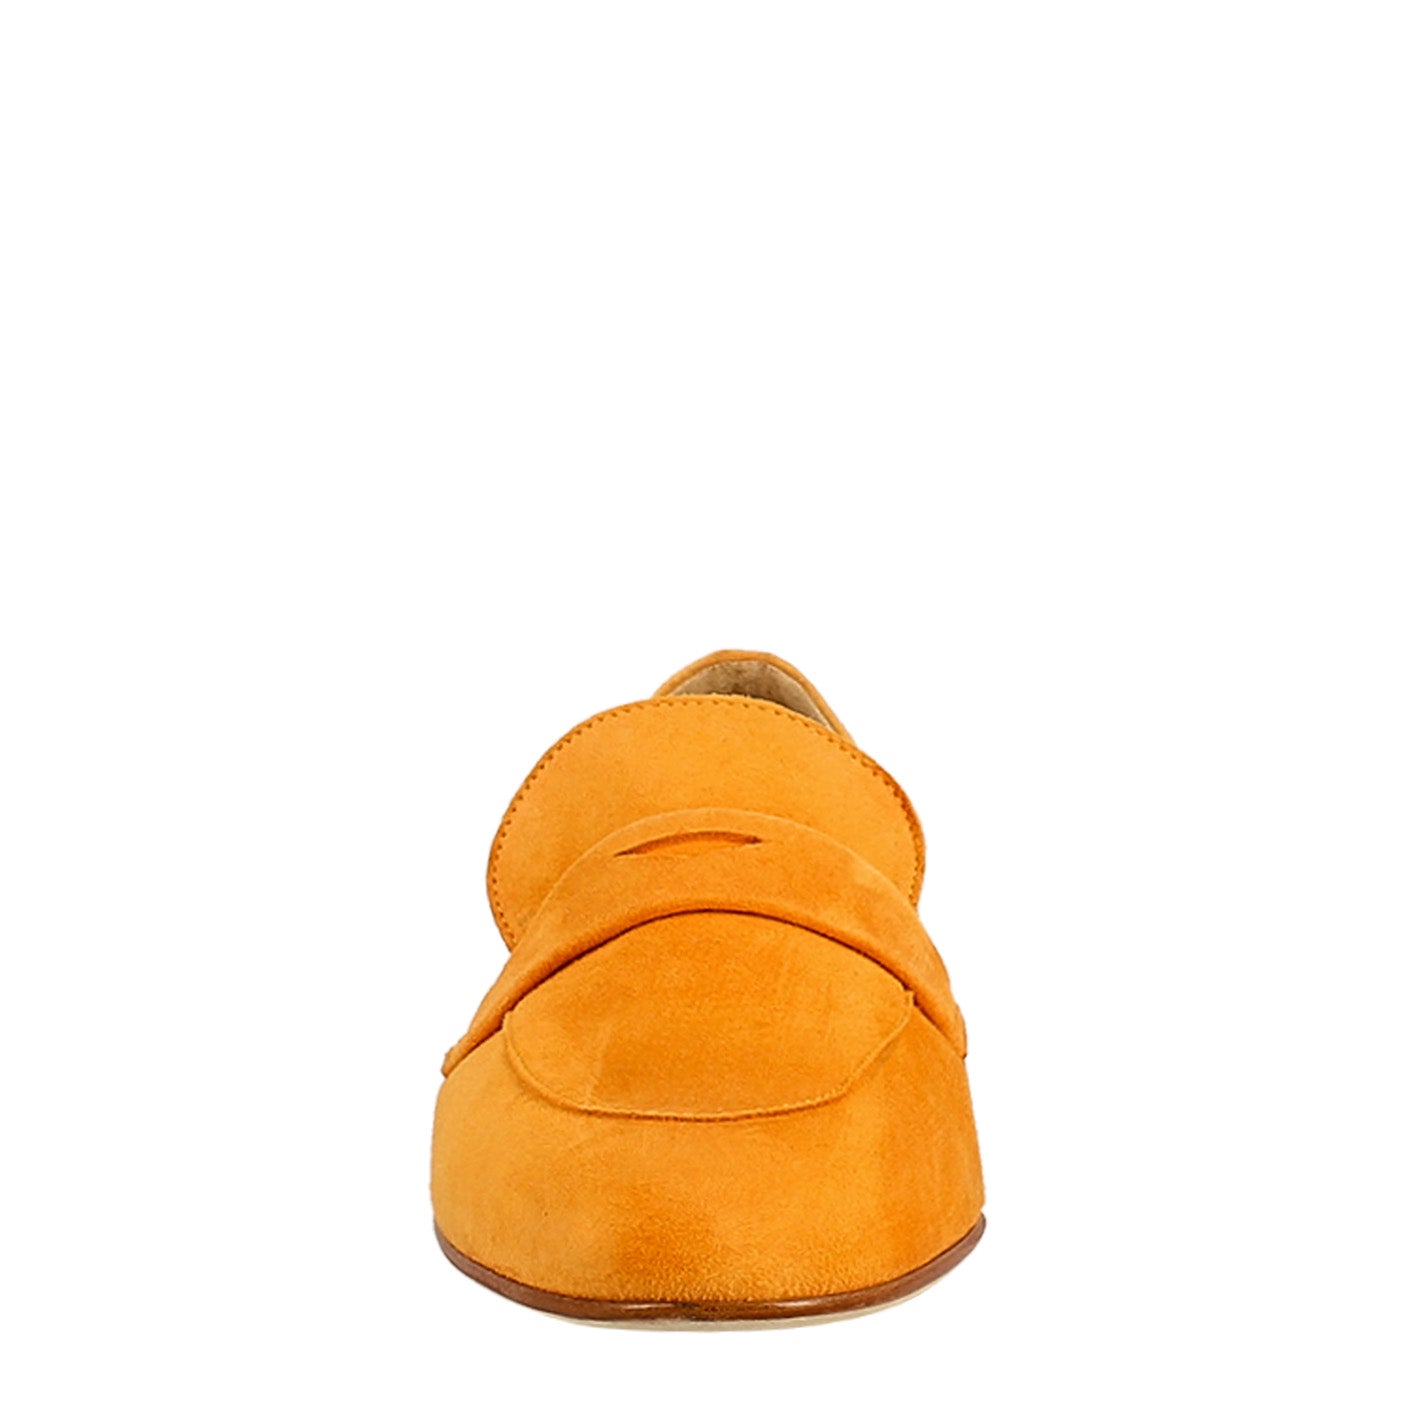 Women's bag moccasin in orange suede